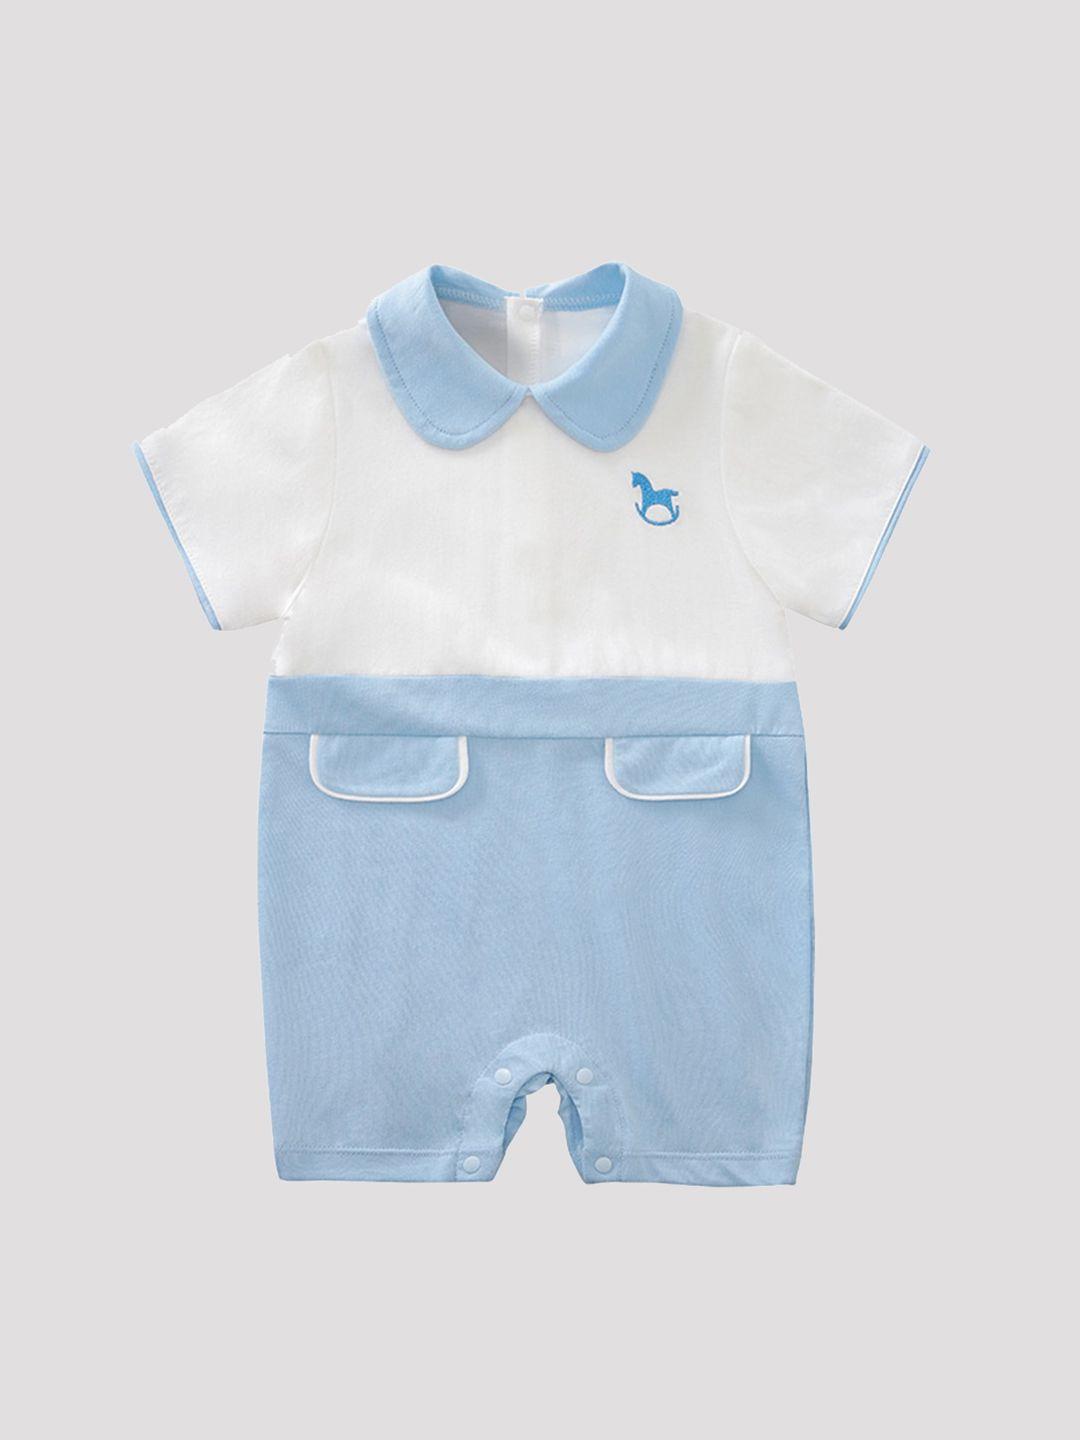 stylecast--infant-boys-blue-white-colourblocked-cotton-rompers